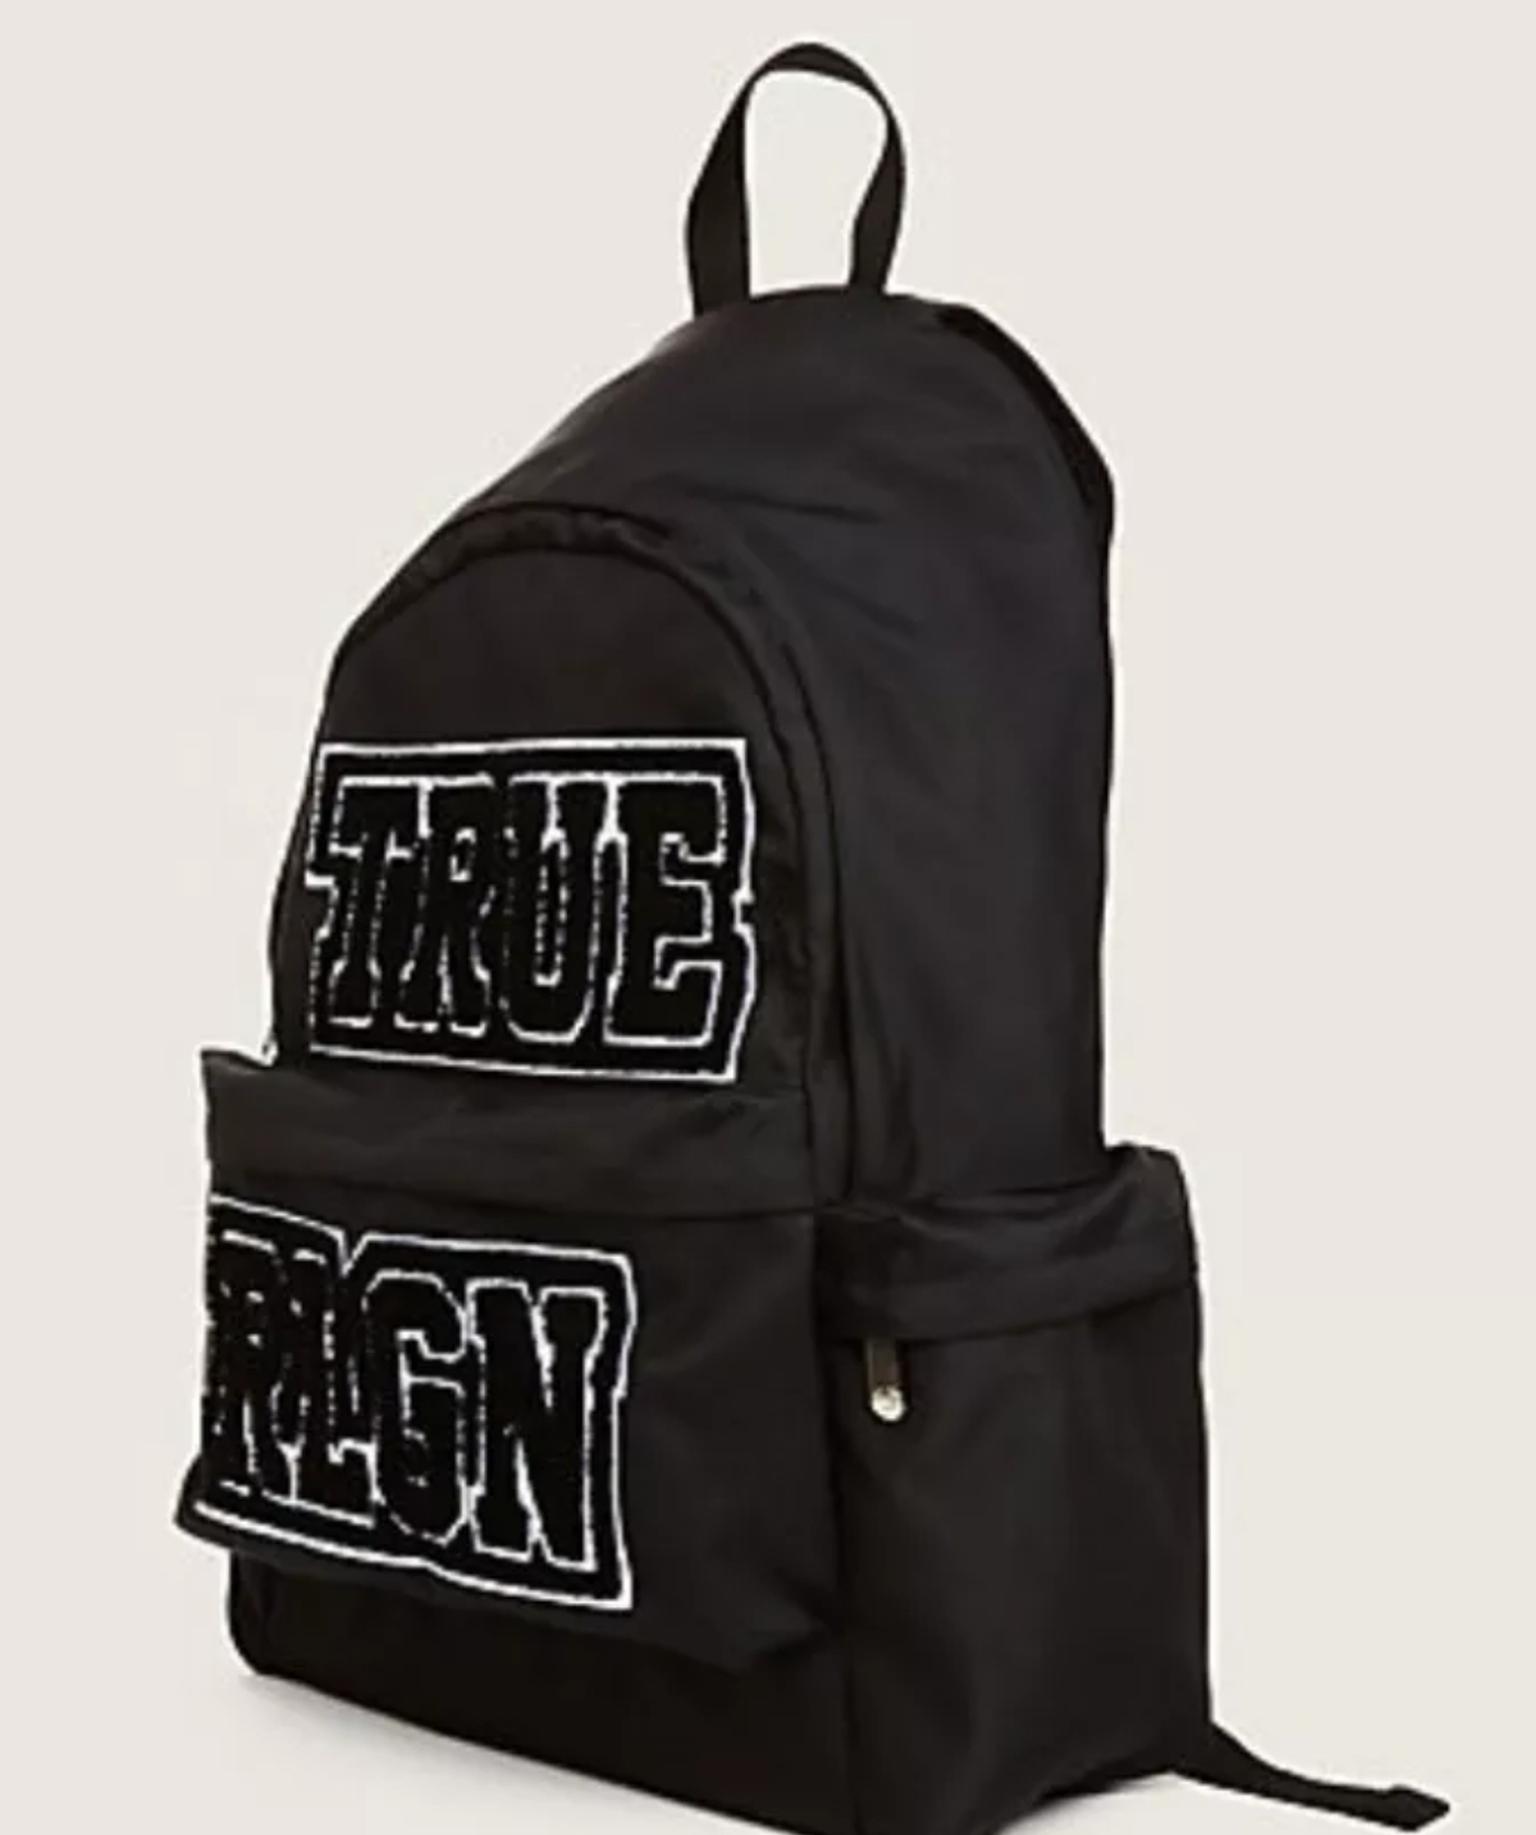 true religion backpack black and white